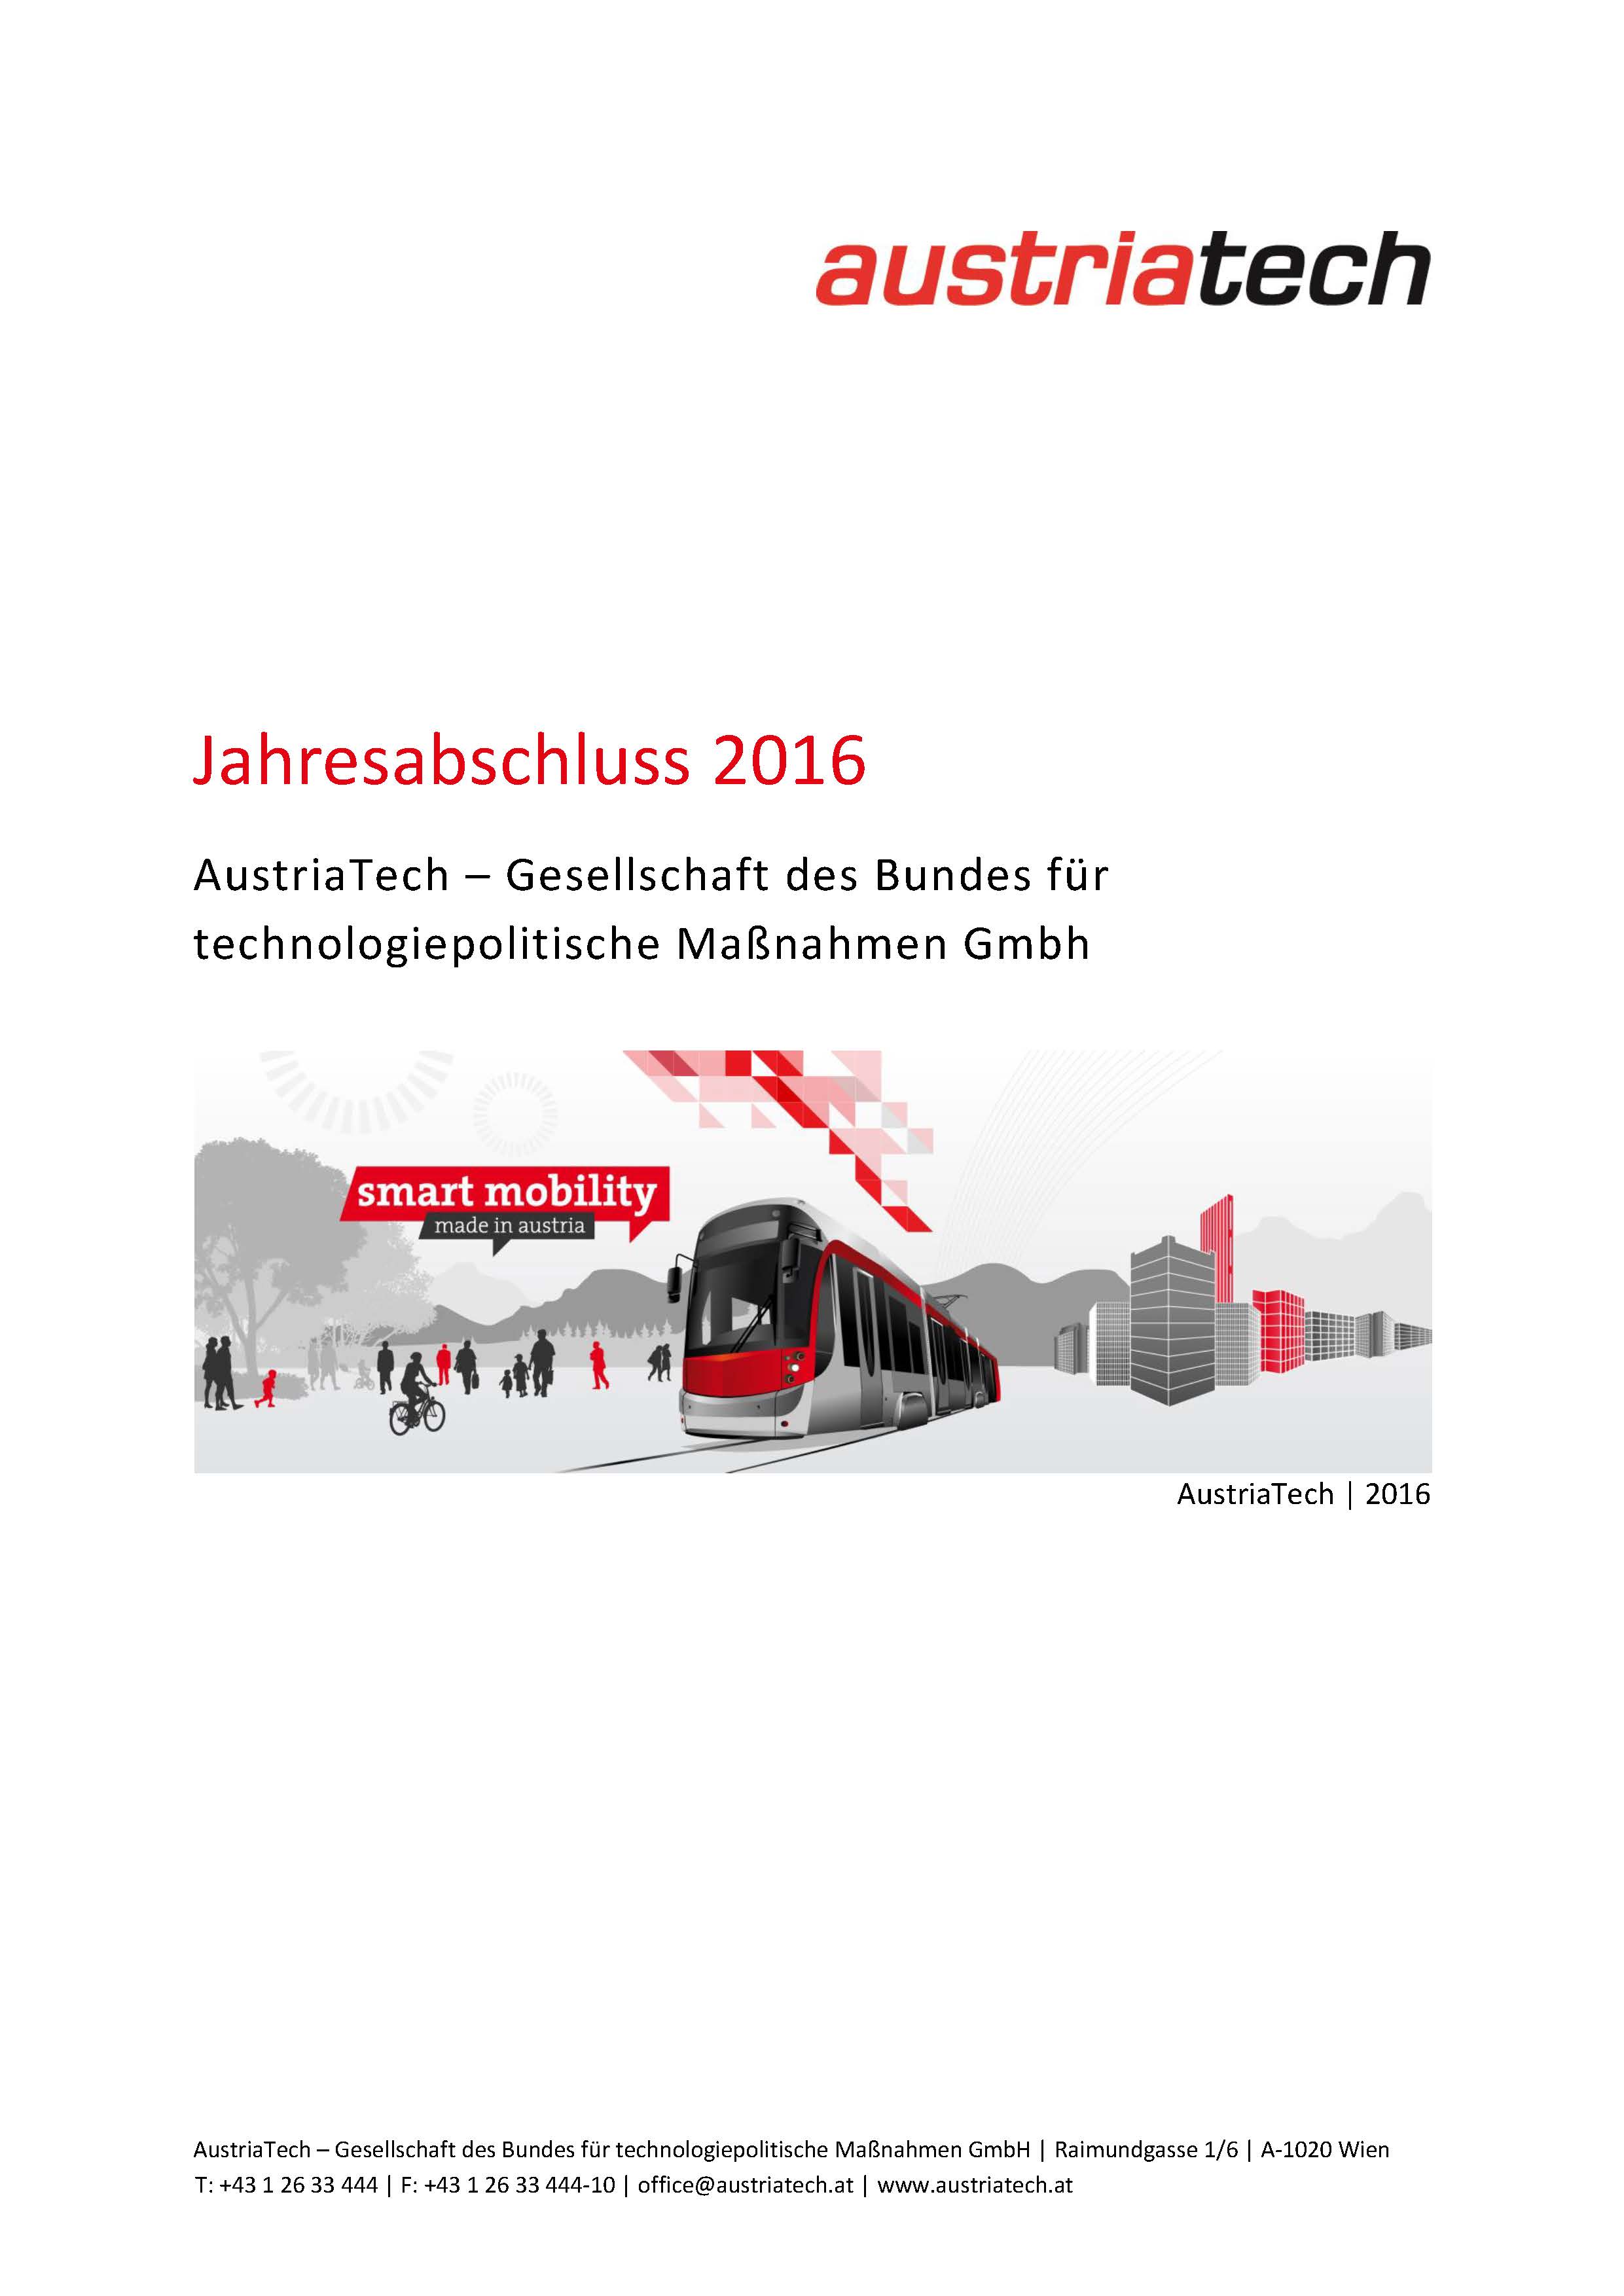 AustriaTech Jahreabschluss 2016